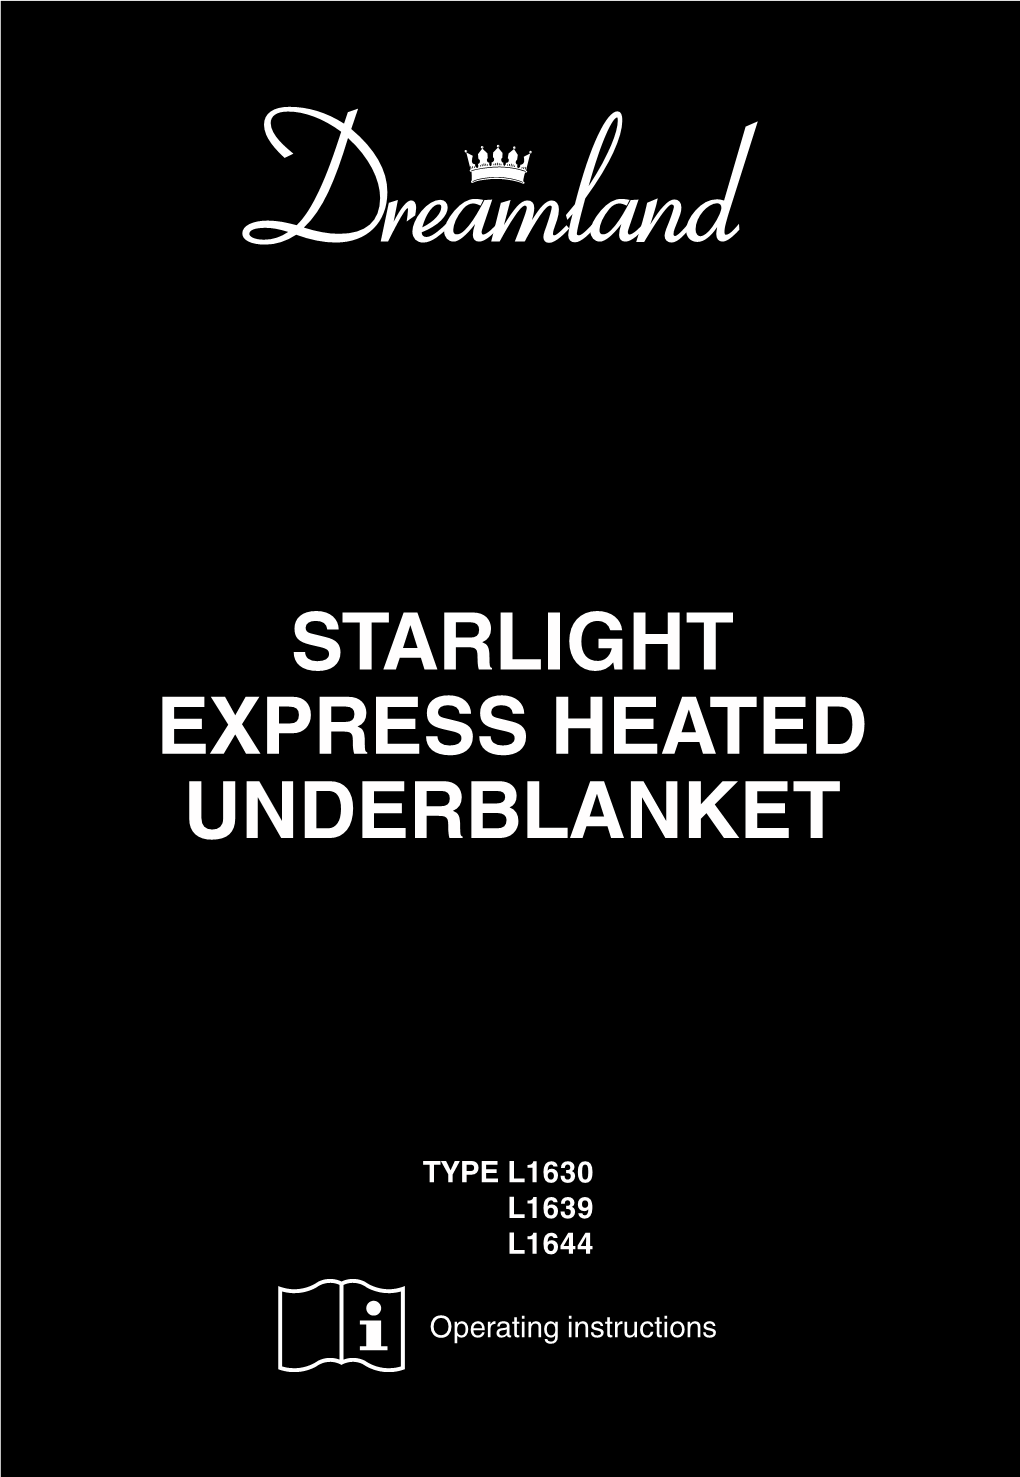 Starlight Express Heated Underblanket